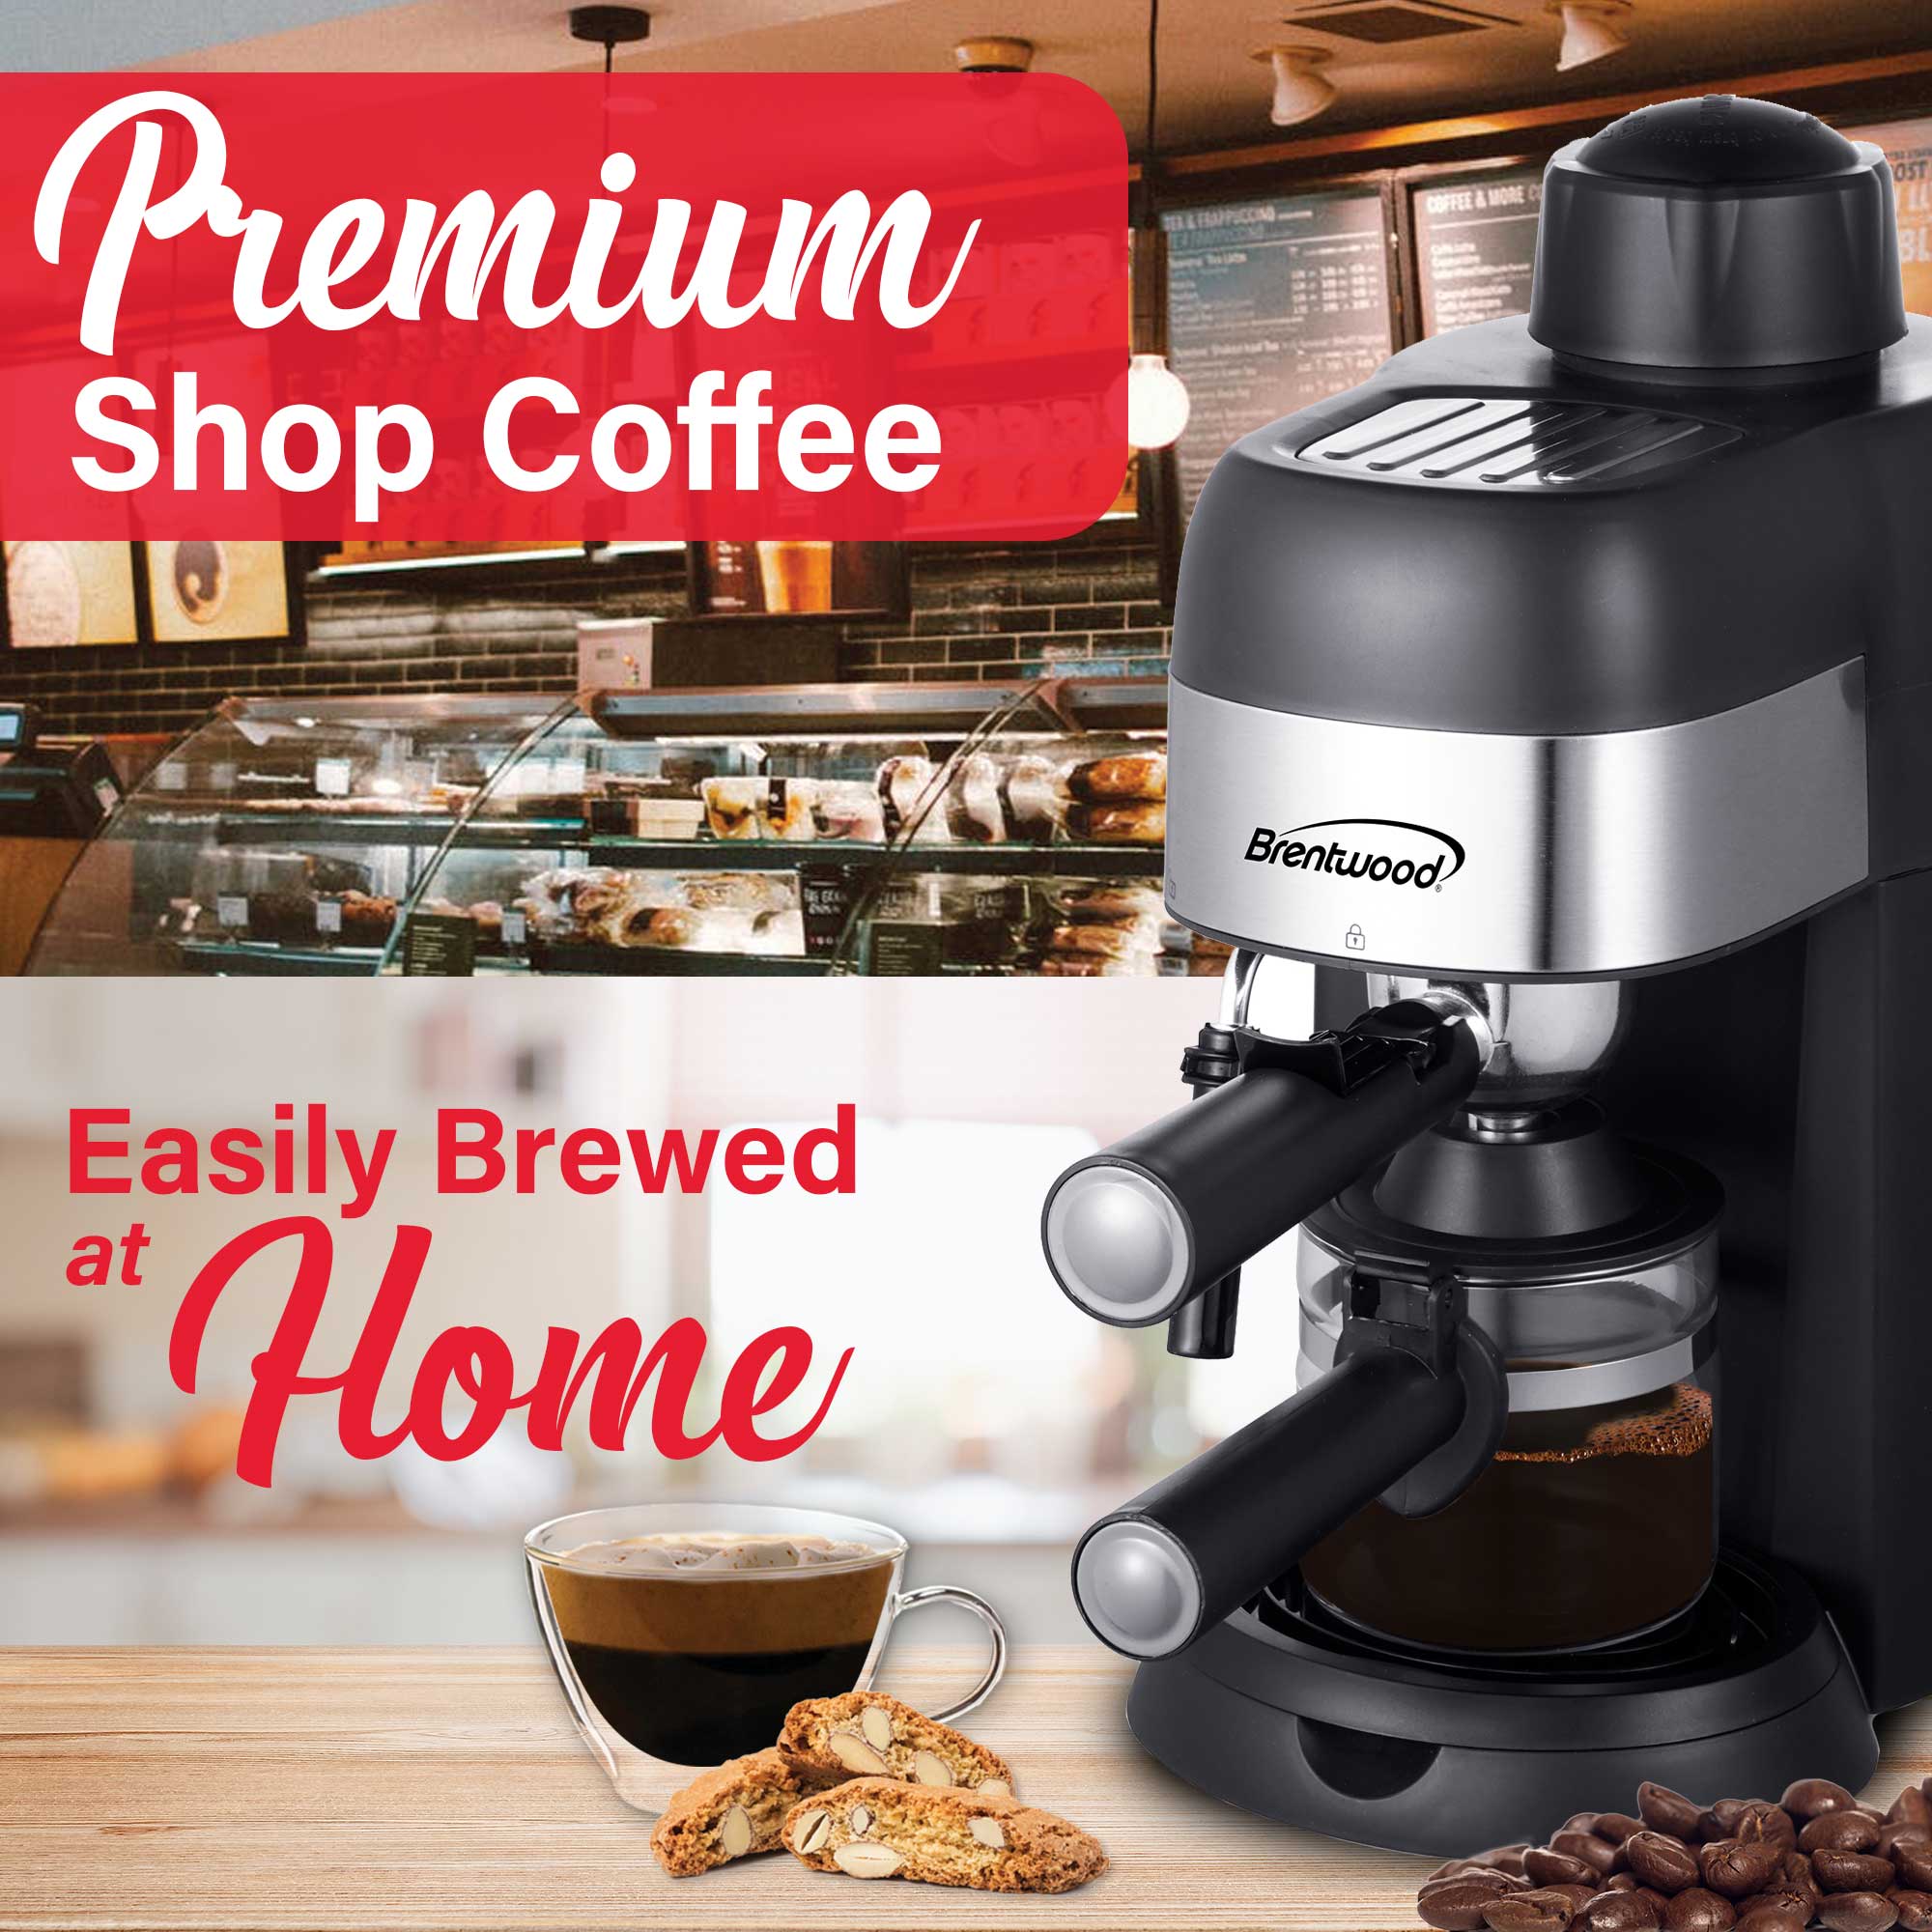 Brentwood 800-watt 20-oz. Espresso And Cappuccino Maker, Black